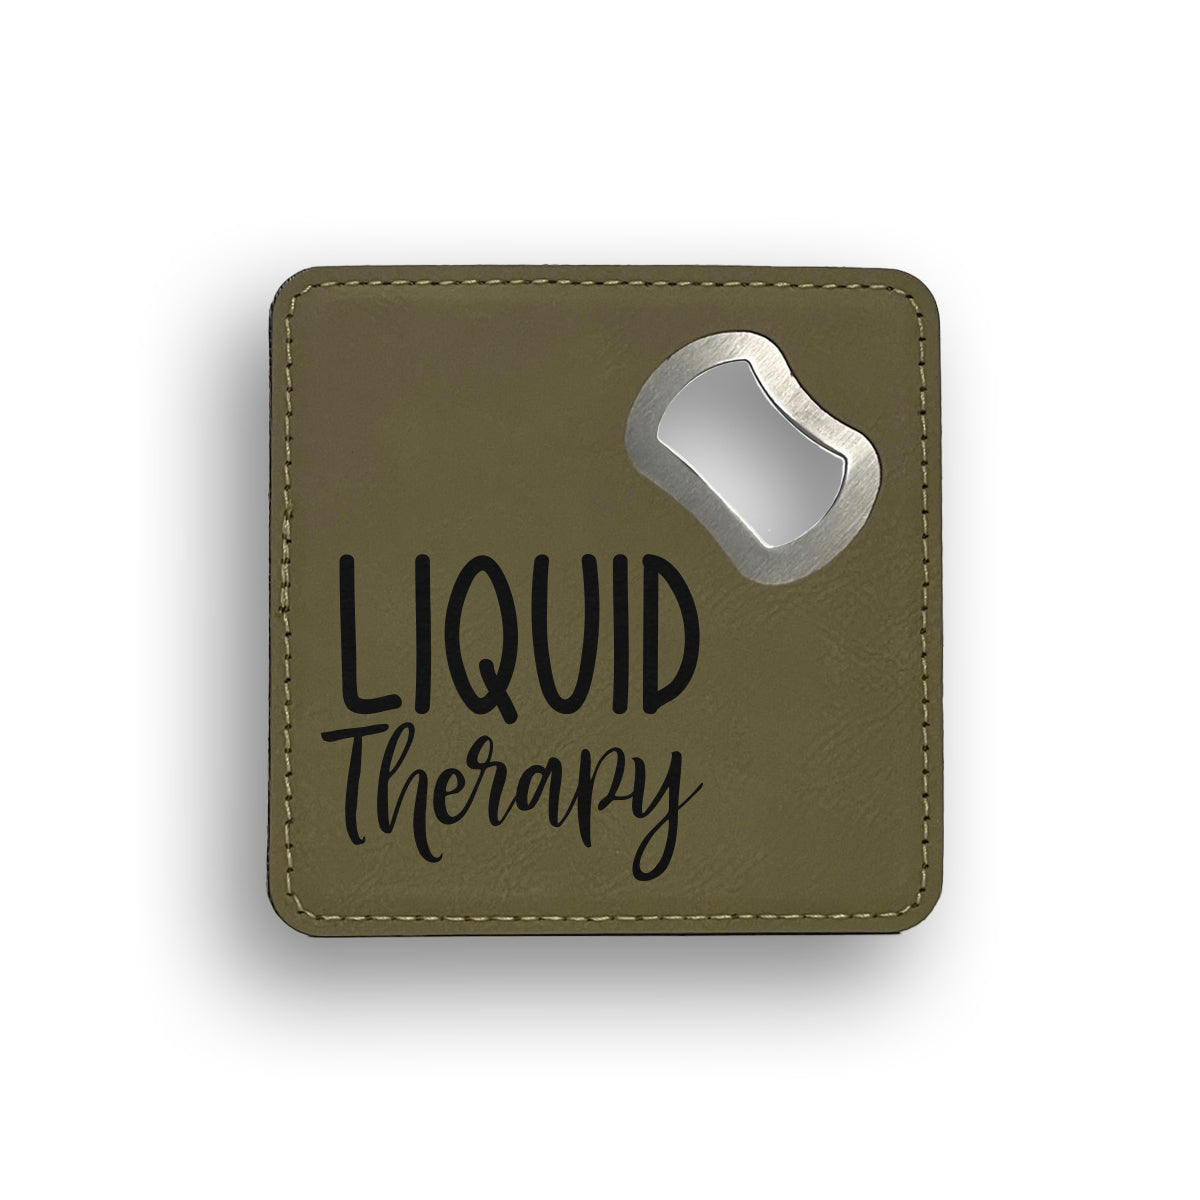 Liquid Therapy Bottle Opener Coaster